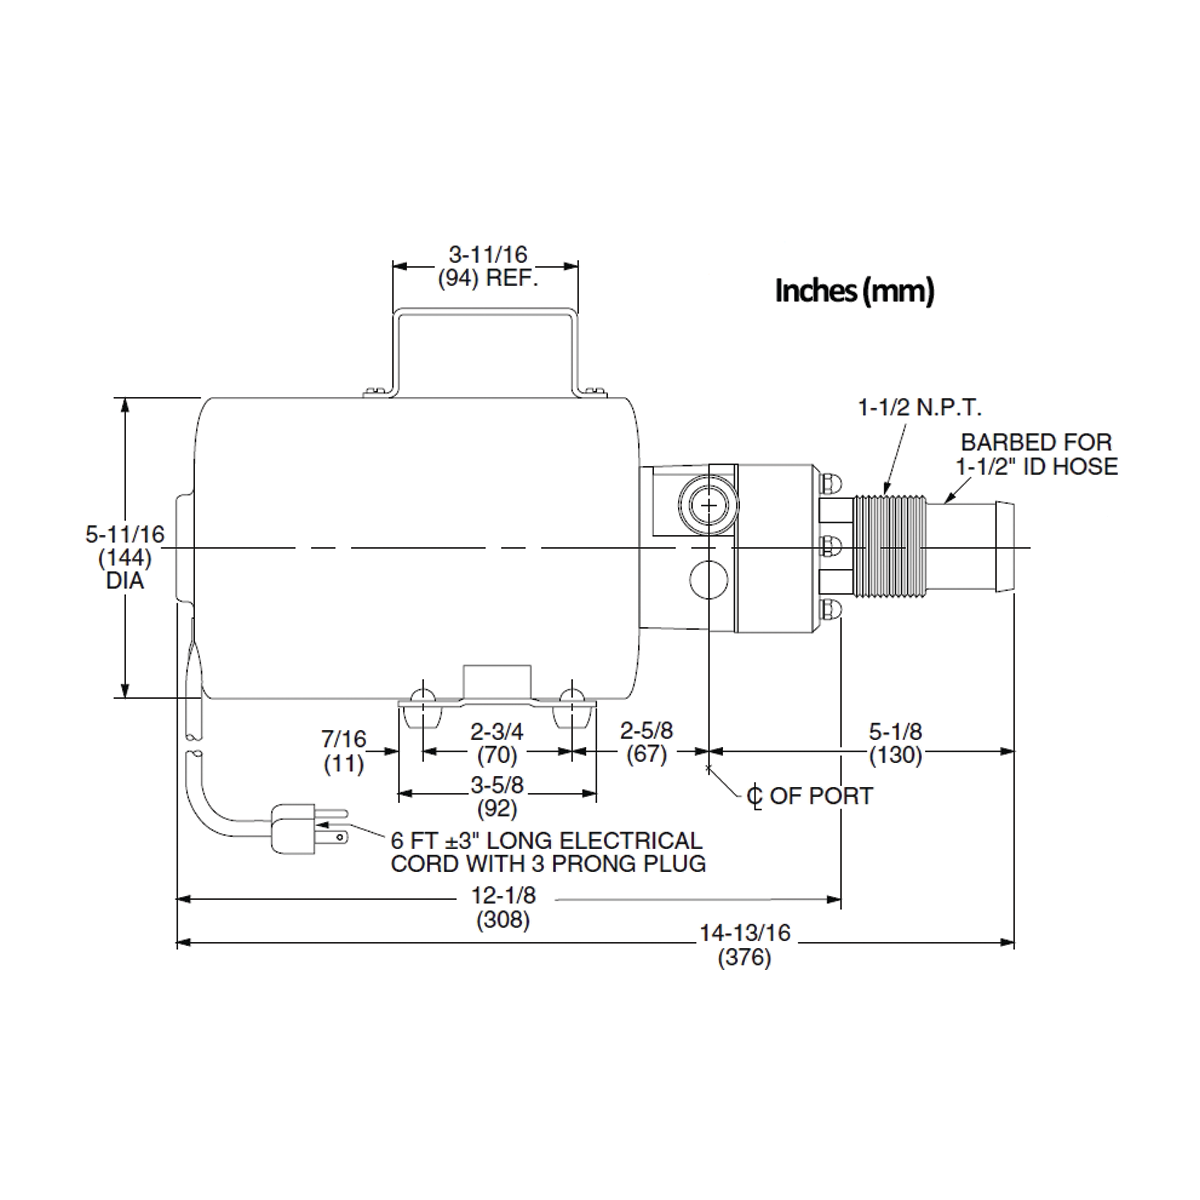 Black Jabsco 18690-0000 Marine Run Dry Heavy Duty Macerator Waste Pump 115-Volt, Marine Model